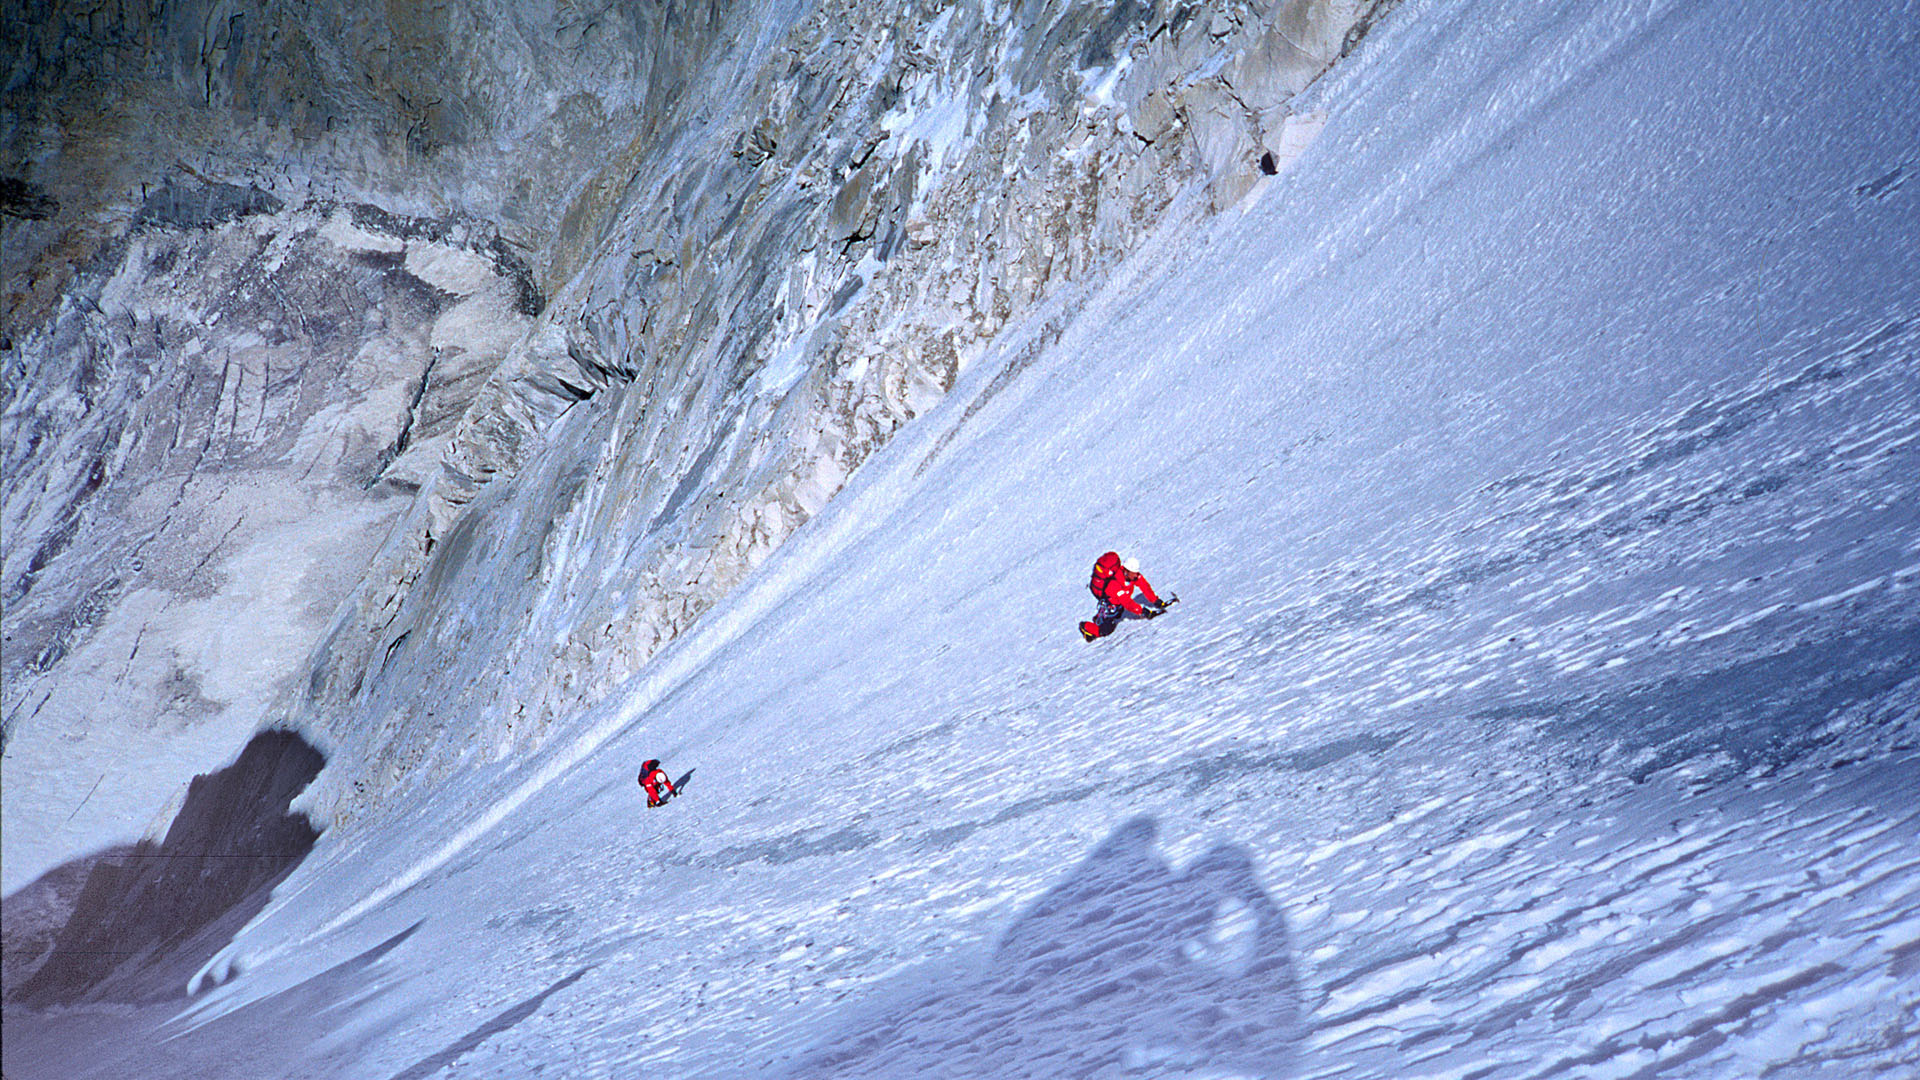 Beklimming van een ijscouloir naar de col - Bhrigupanth Expeditie bergbeklimmer Melvin Redeker